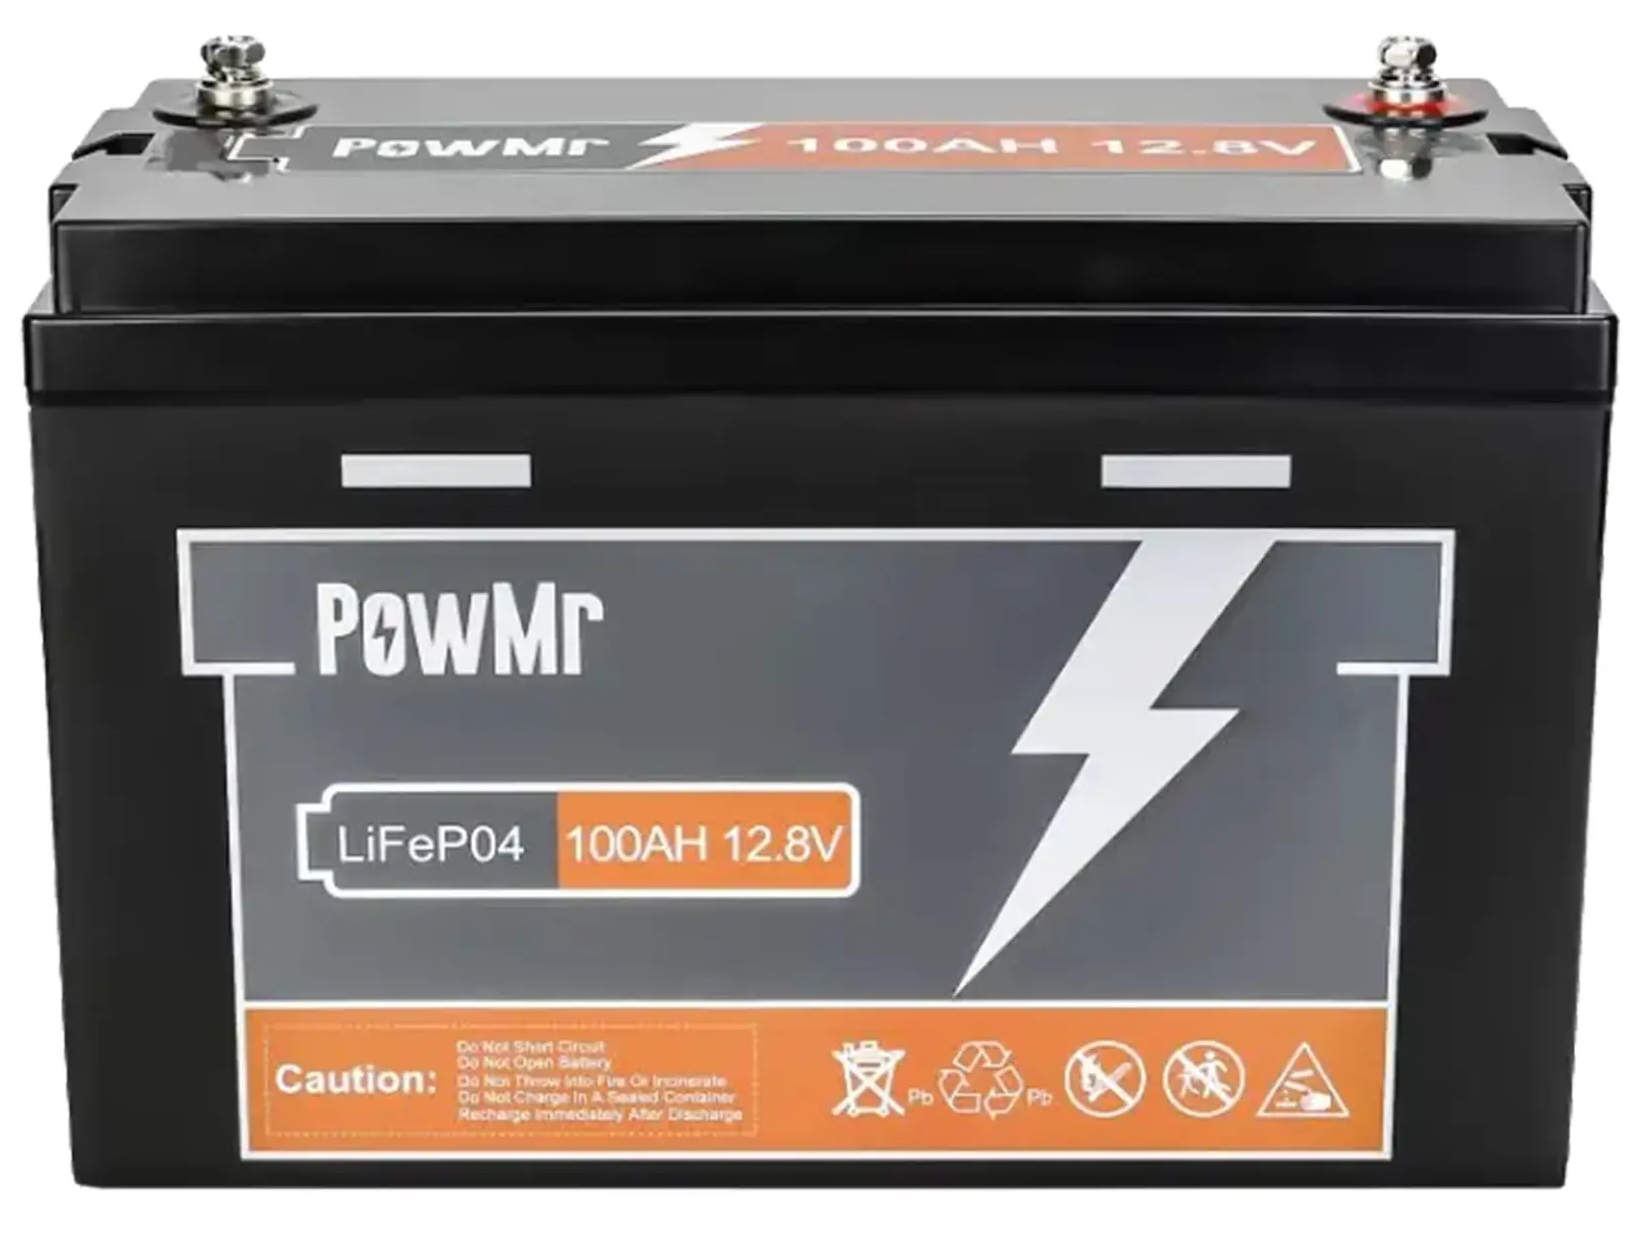 Акумуляторна батарея PowMr 12.8V 100Ah LiFePo4 (POW-100AH-12V) в інтернет-магазині, головне фото